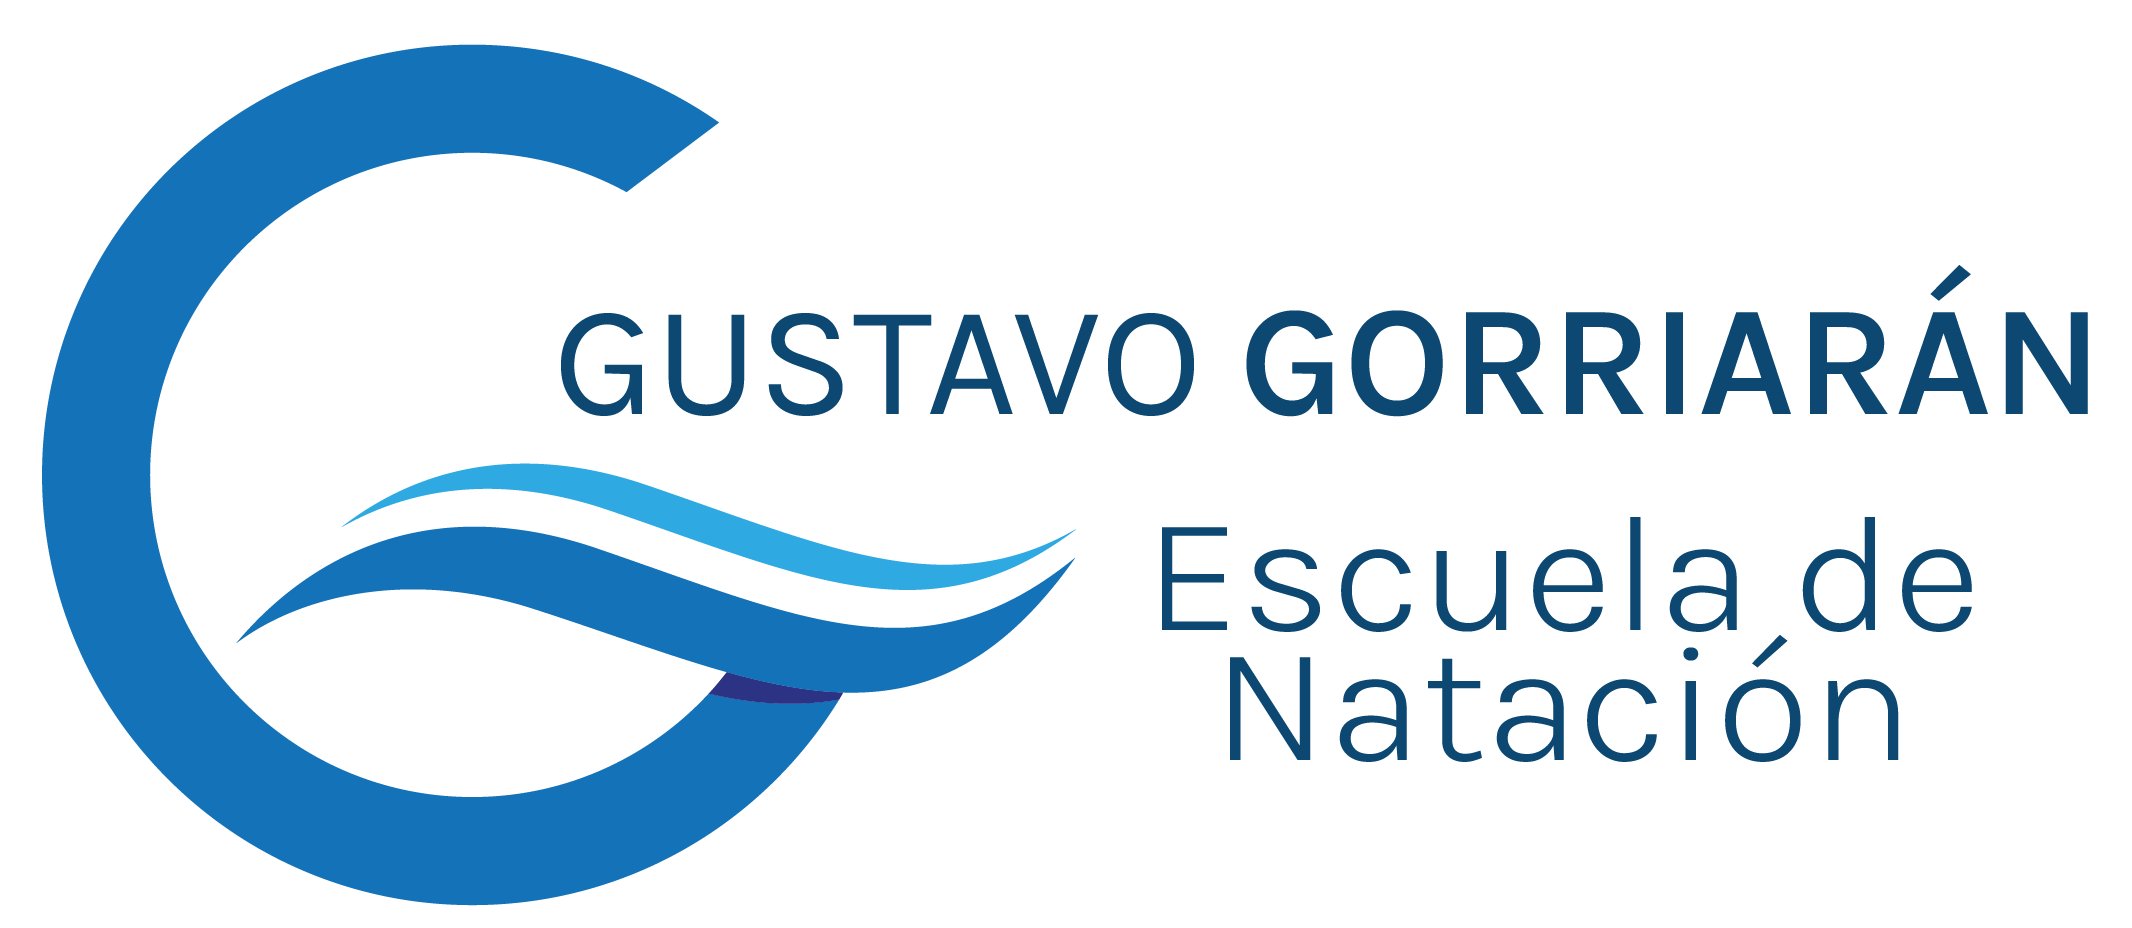 Gustavo Gorriaran – Escuela de Natación